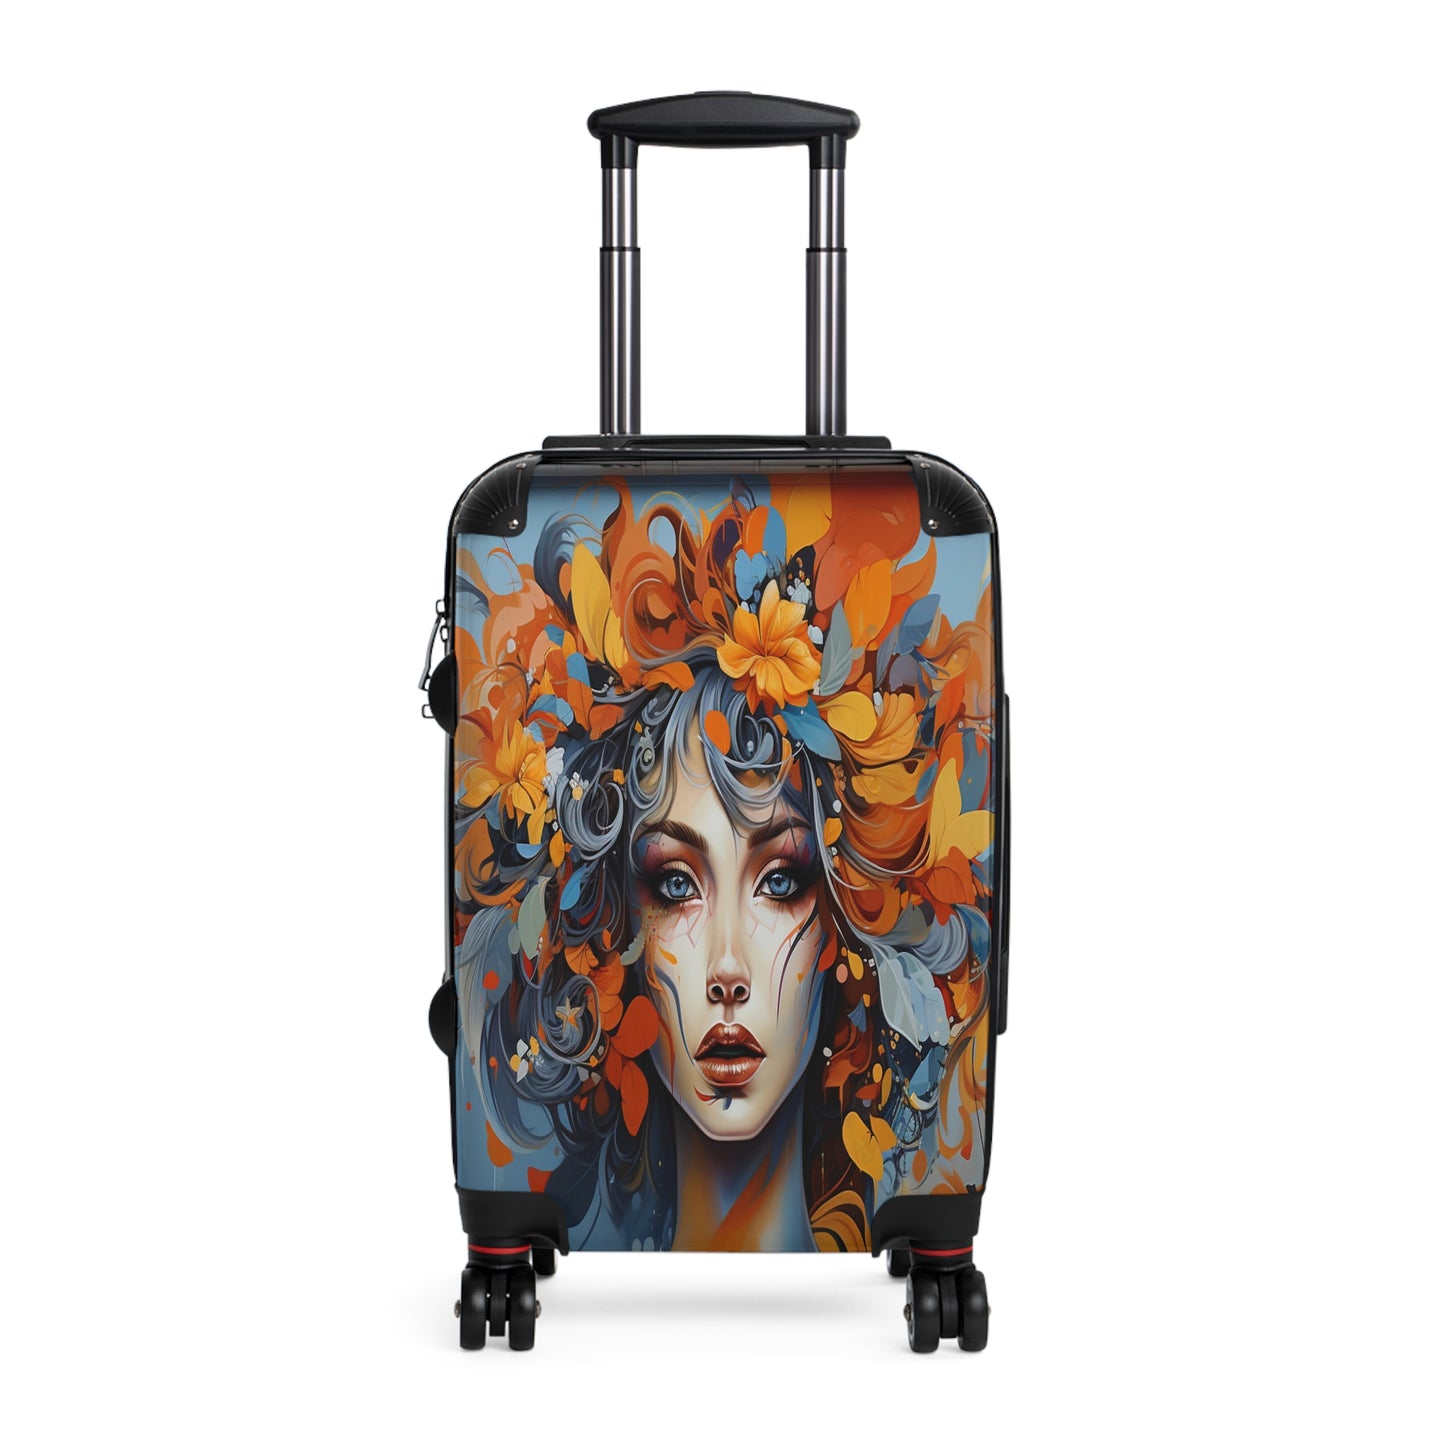 Boho Street Canvas Luggage | Hippie Trip Collection | Christmas vacation | Travel Luggage | Suitcase | Boho | Retro